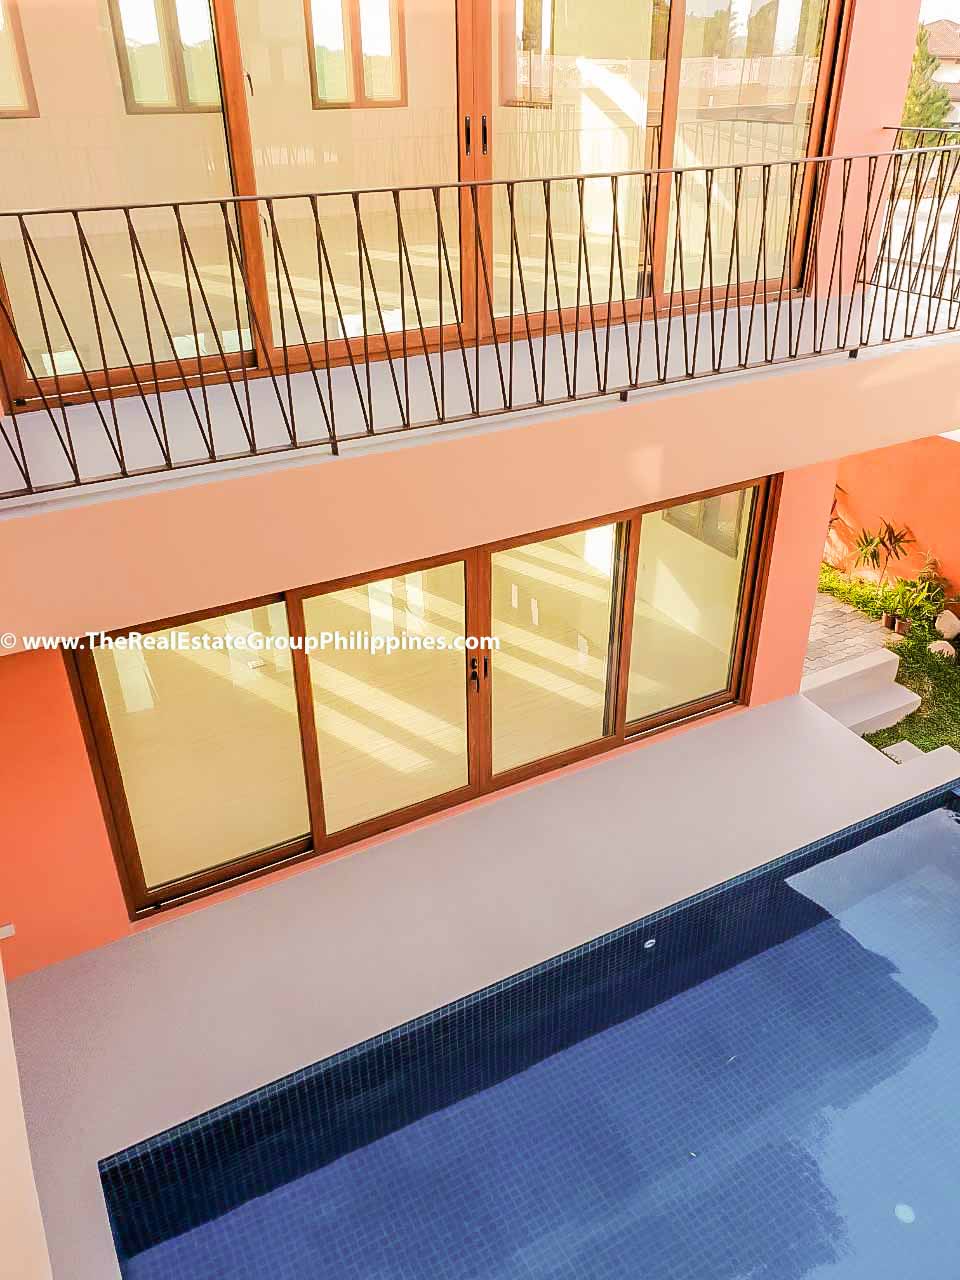 4 Bedrooms House For Rent, Portofino South, Las Piñas City-2